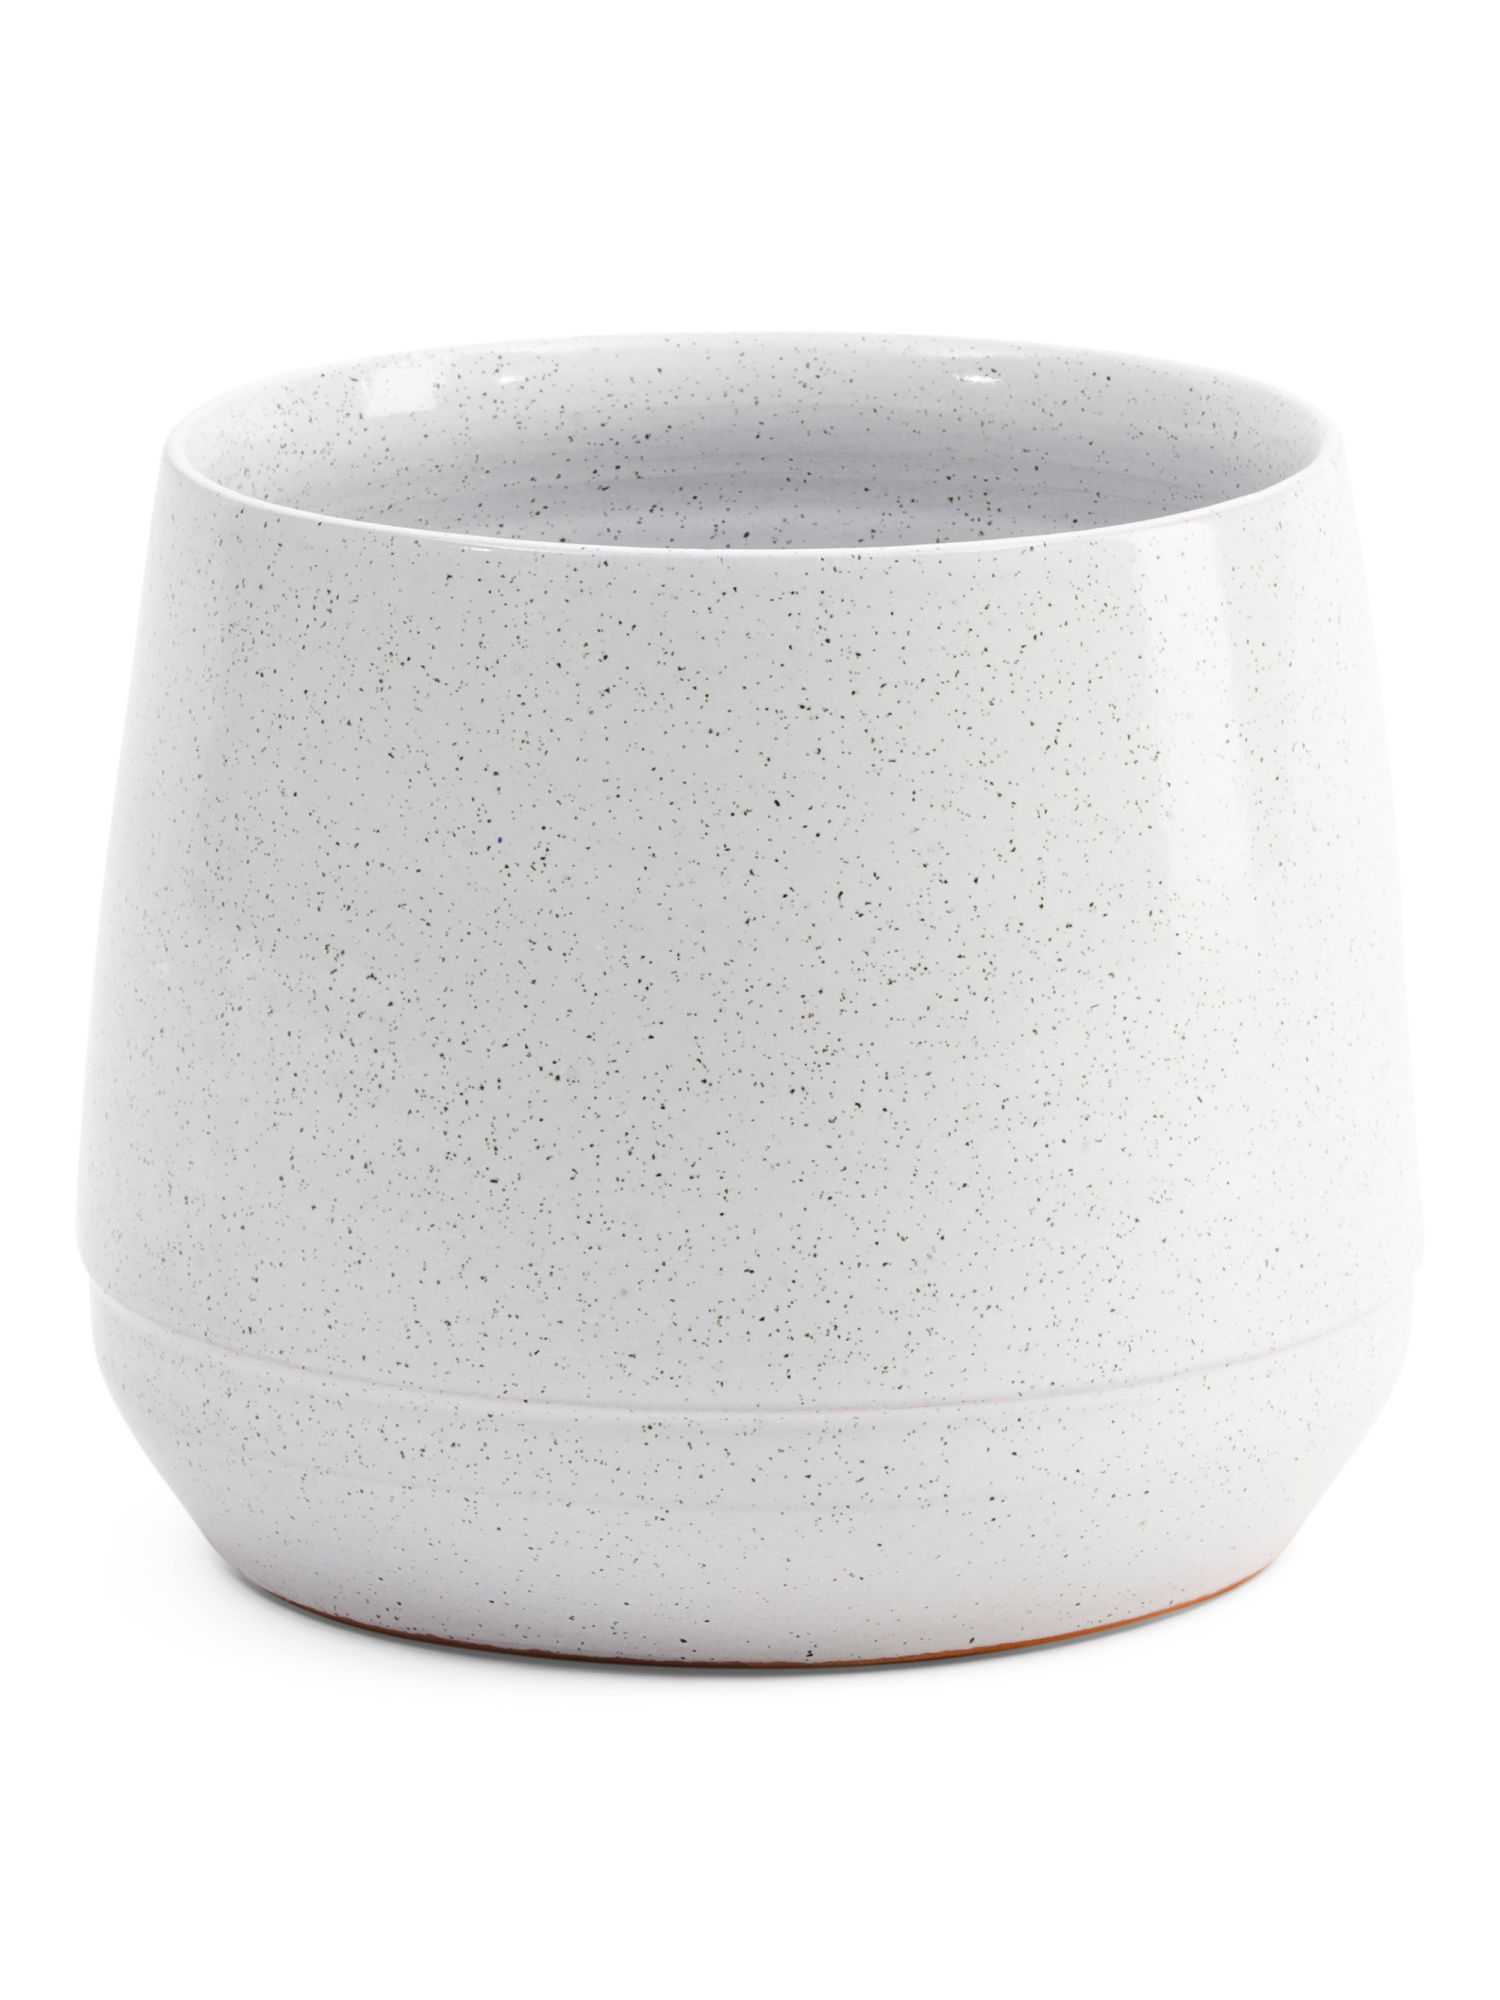 Made In Portugal Ceramic Foot Pot | TJ Maxx